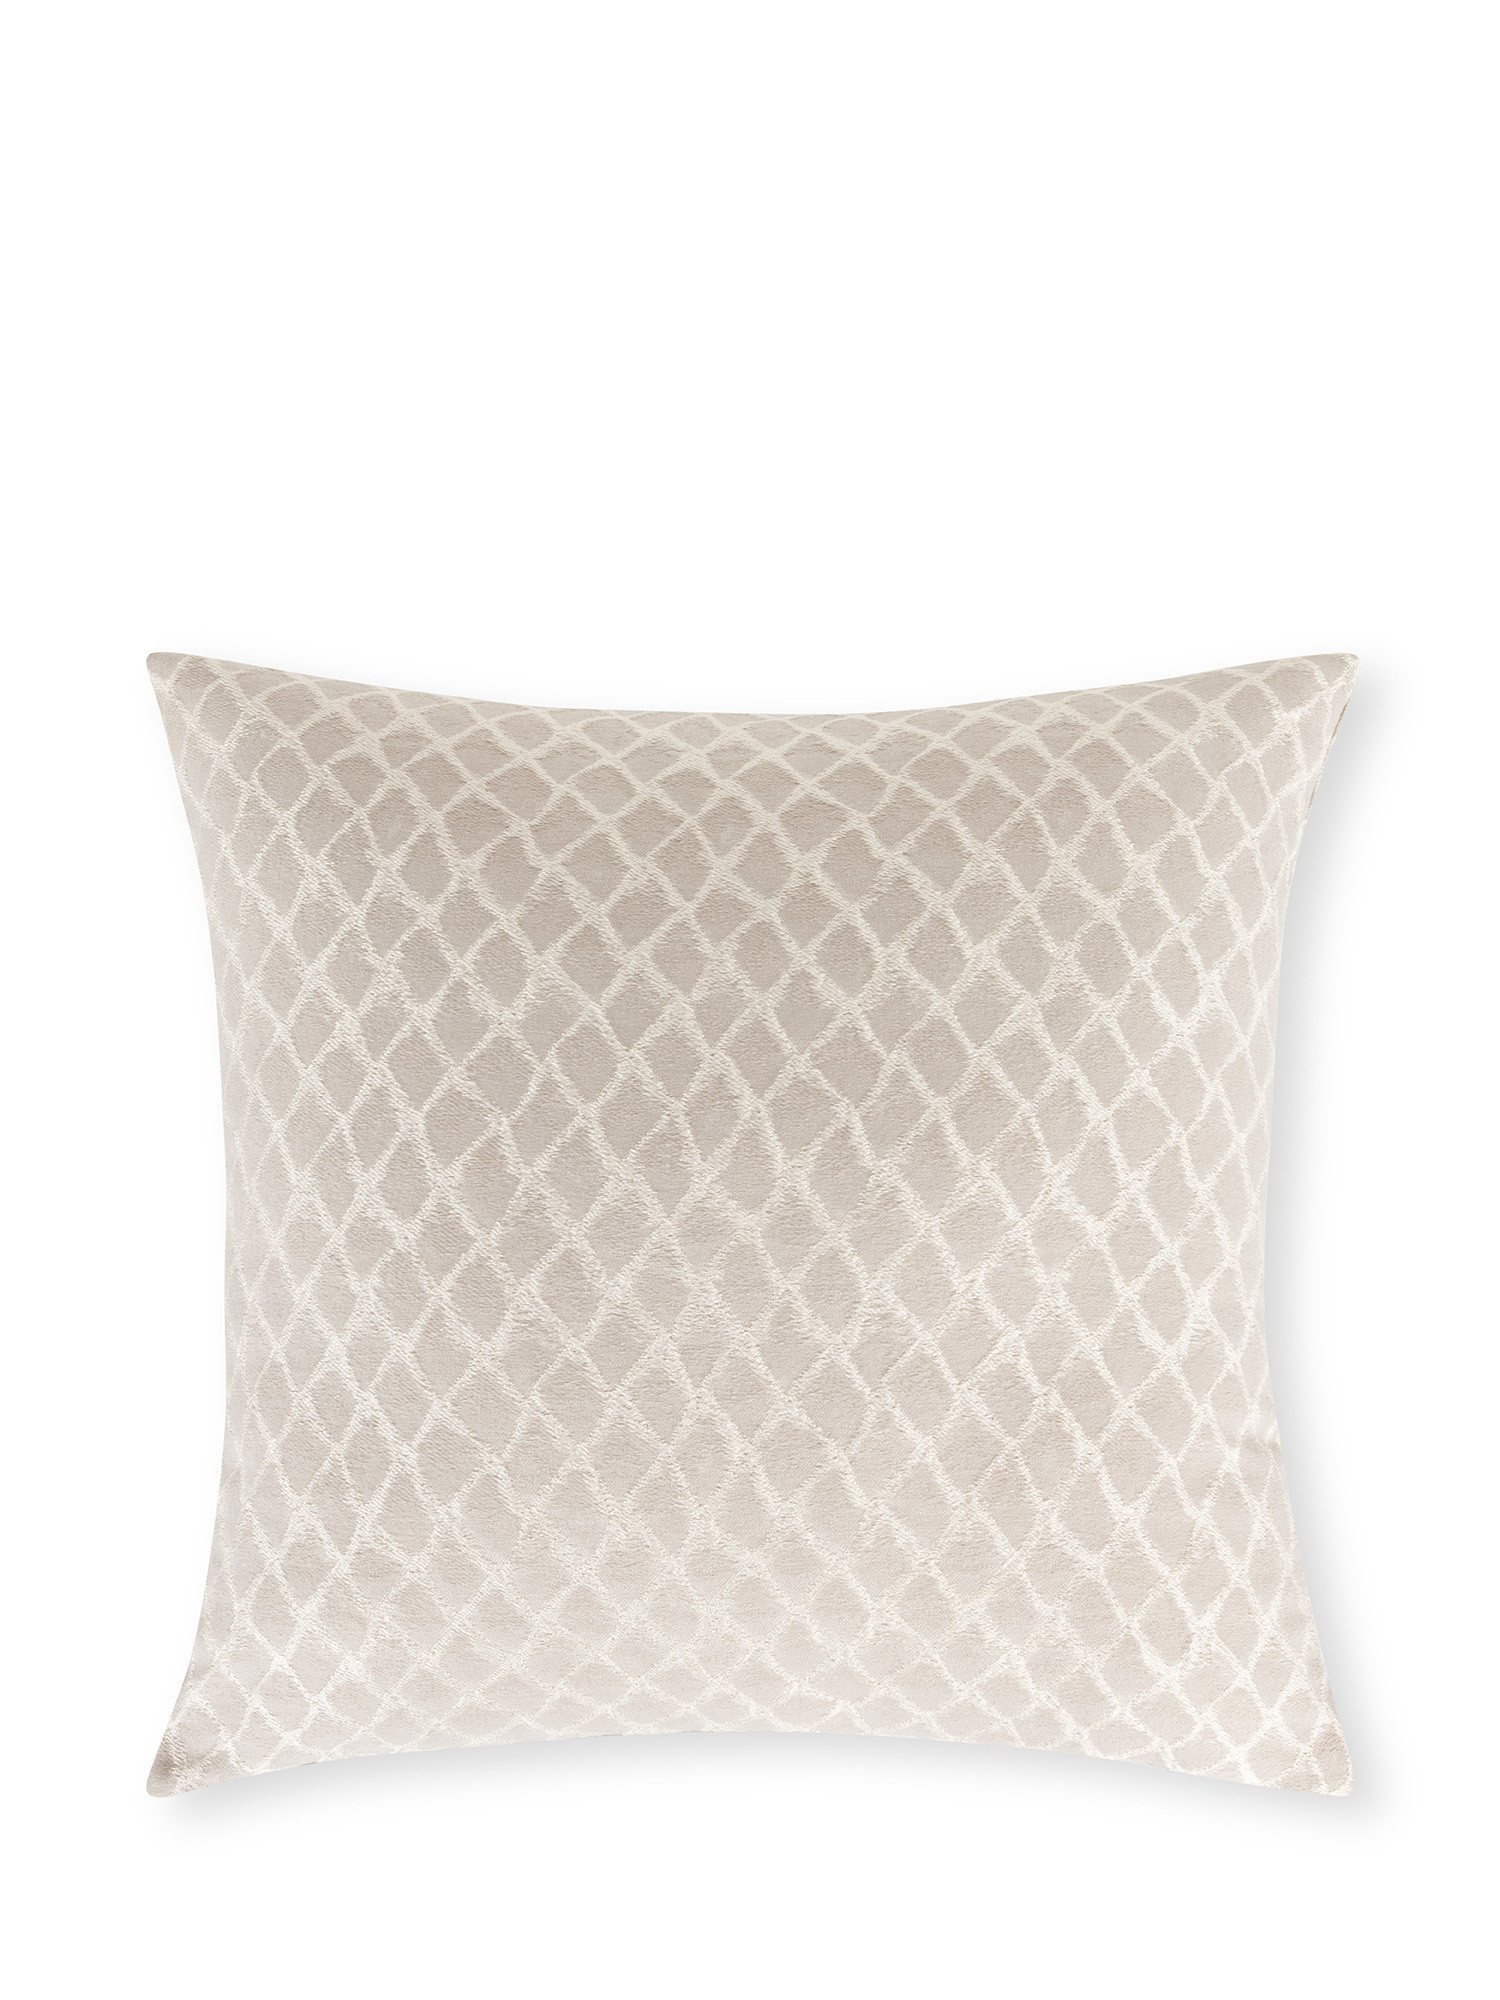 Cuscino in tessuto jacquard  motivo geometrico 45x45 cm, Grigio argento, large image number 0